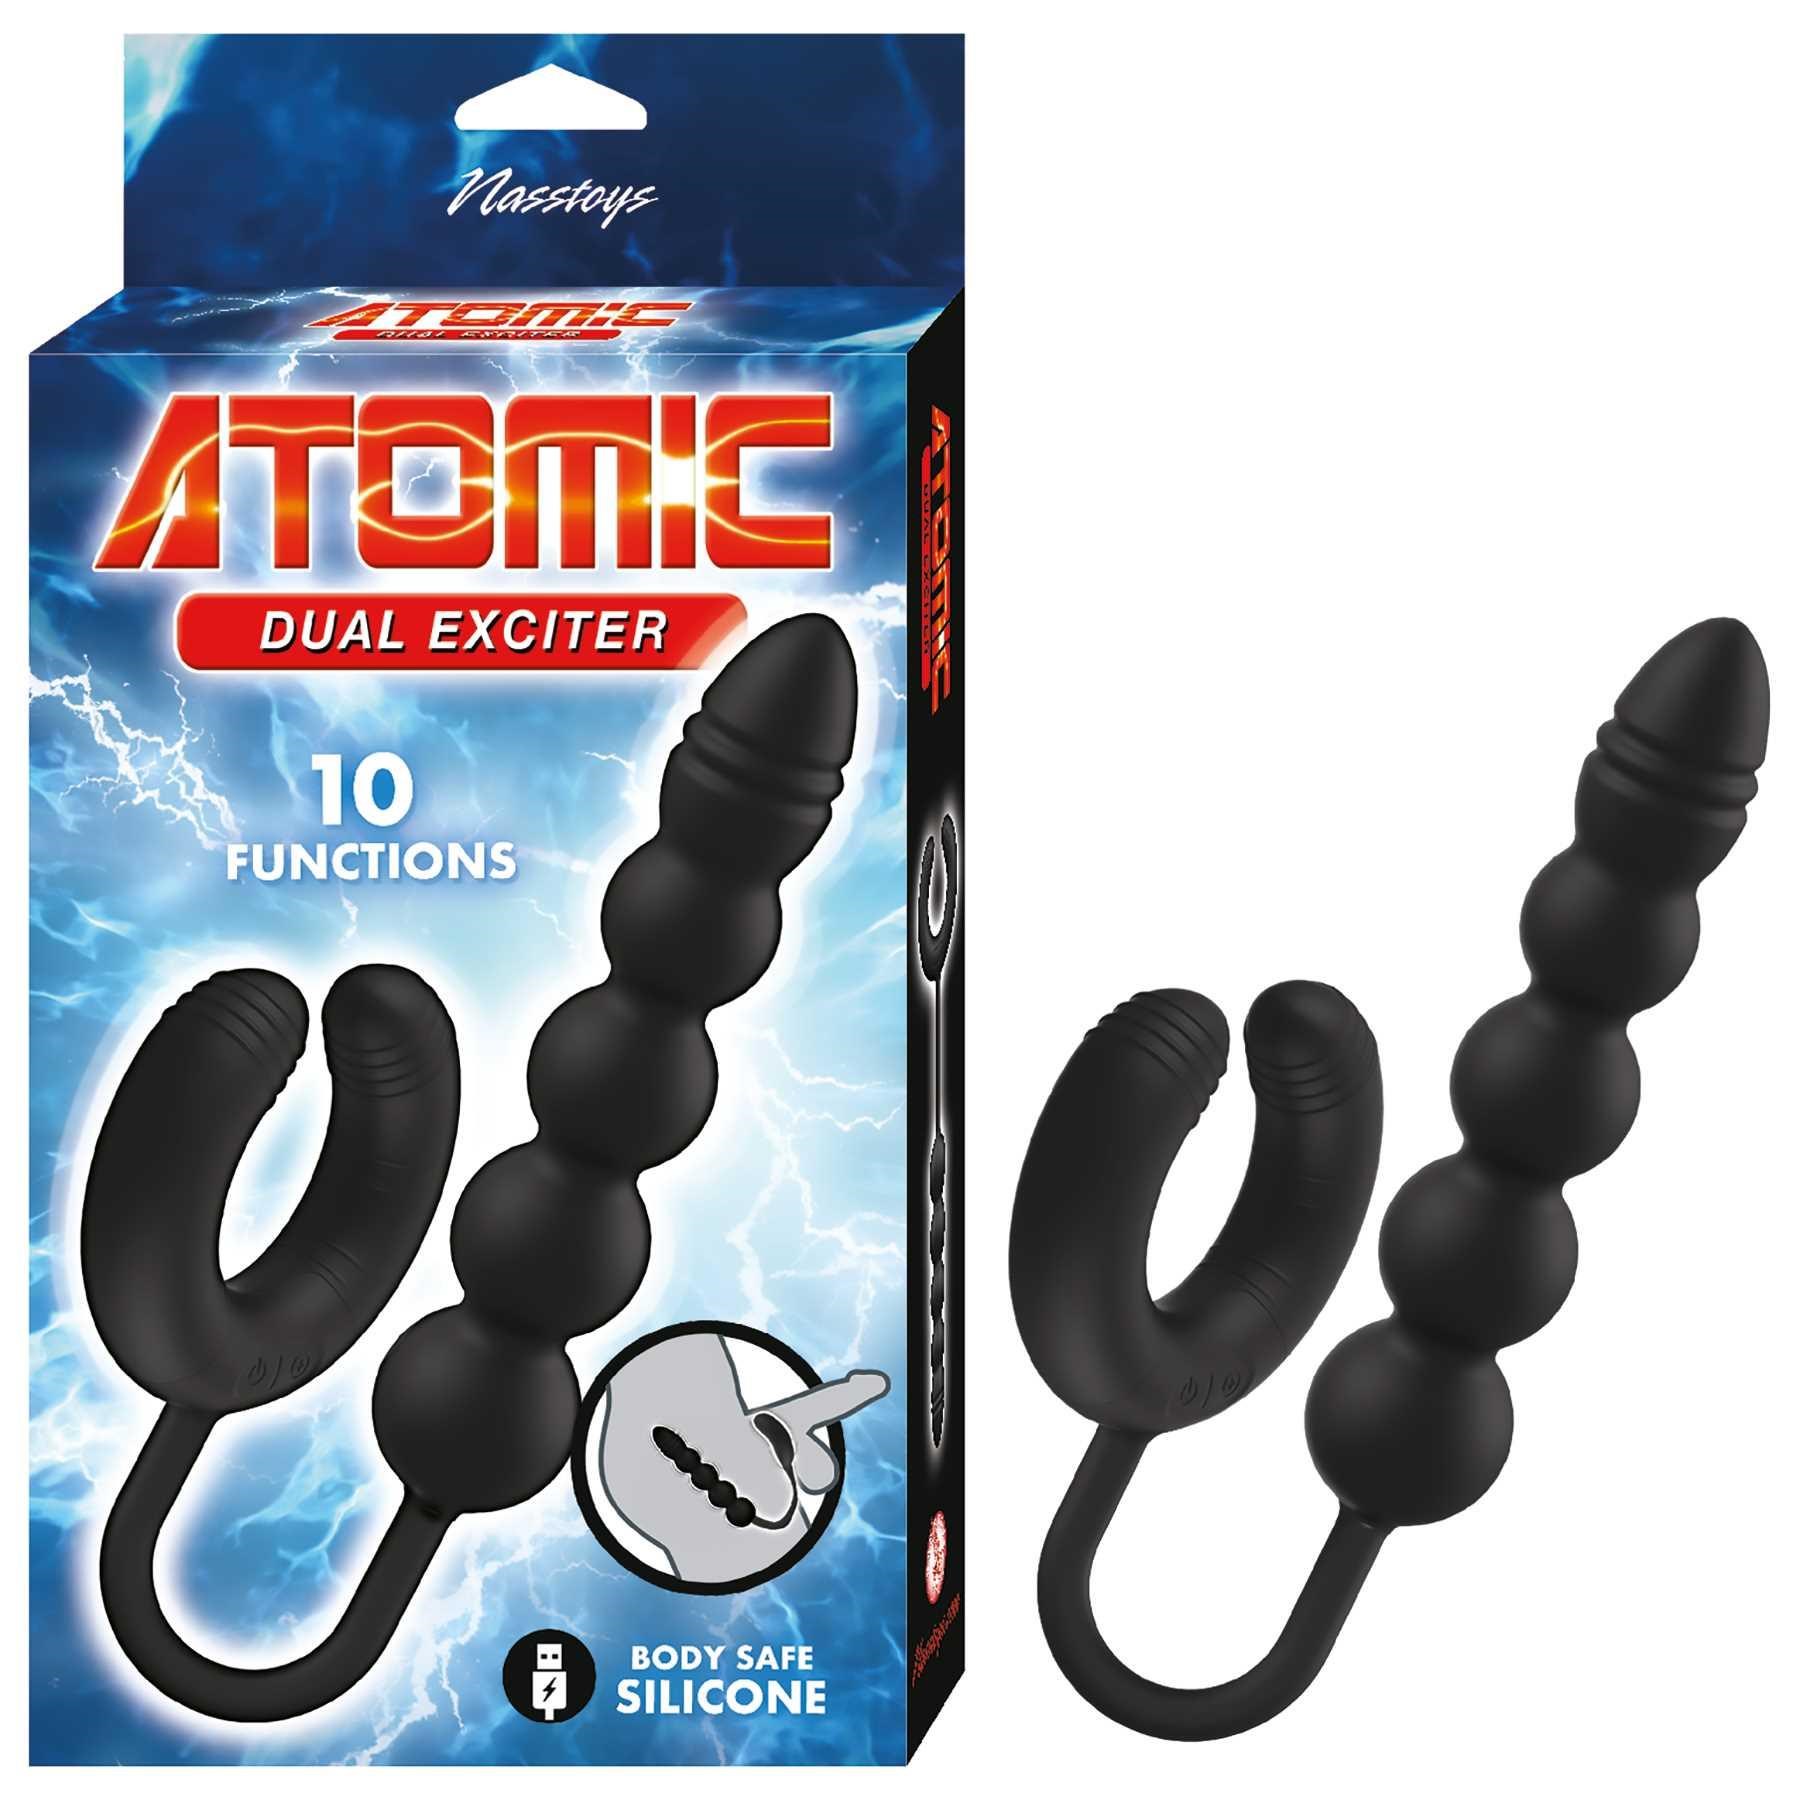 Atomic Dual Exciter packaging